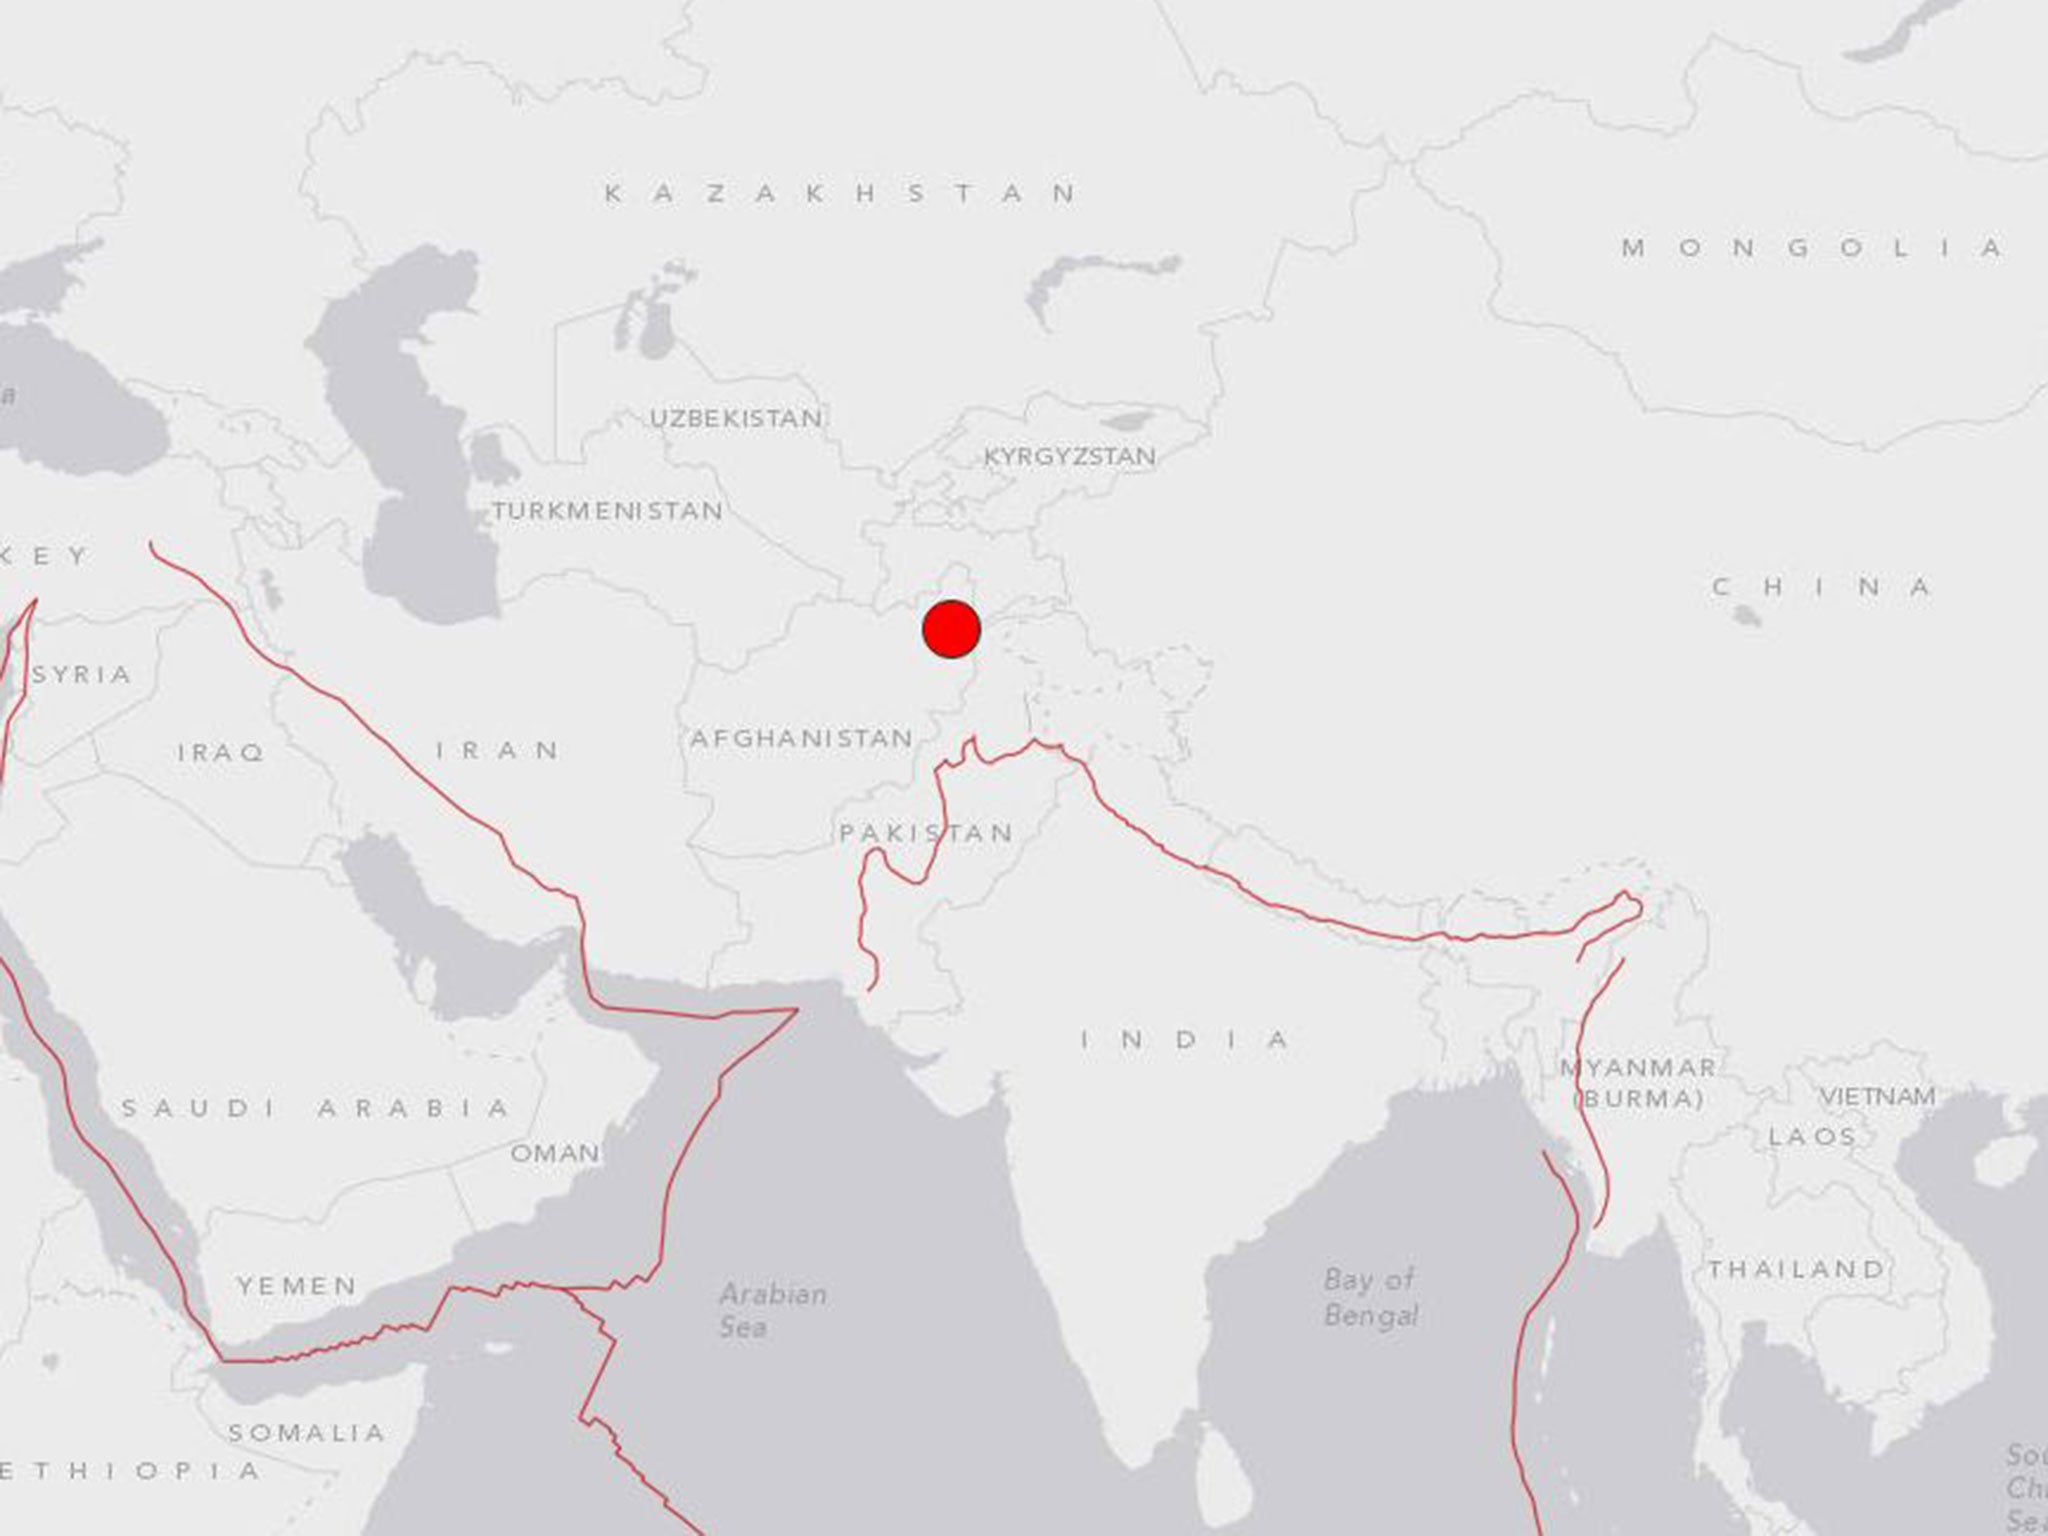 US geological survey records a 7.7-magnitude earthquake felt across Afghanistan, India and Pakistan